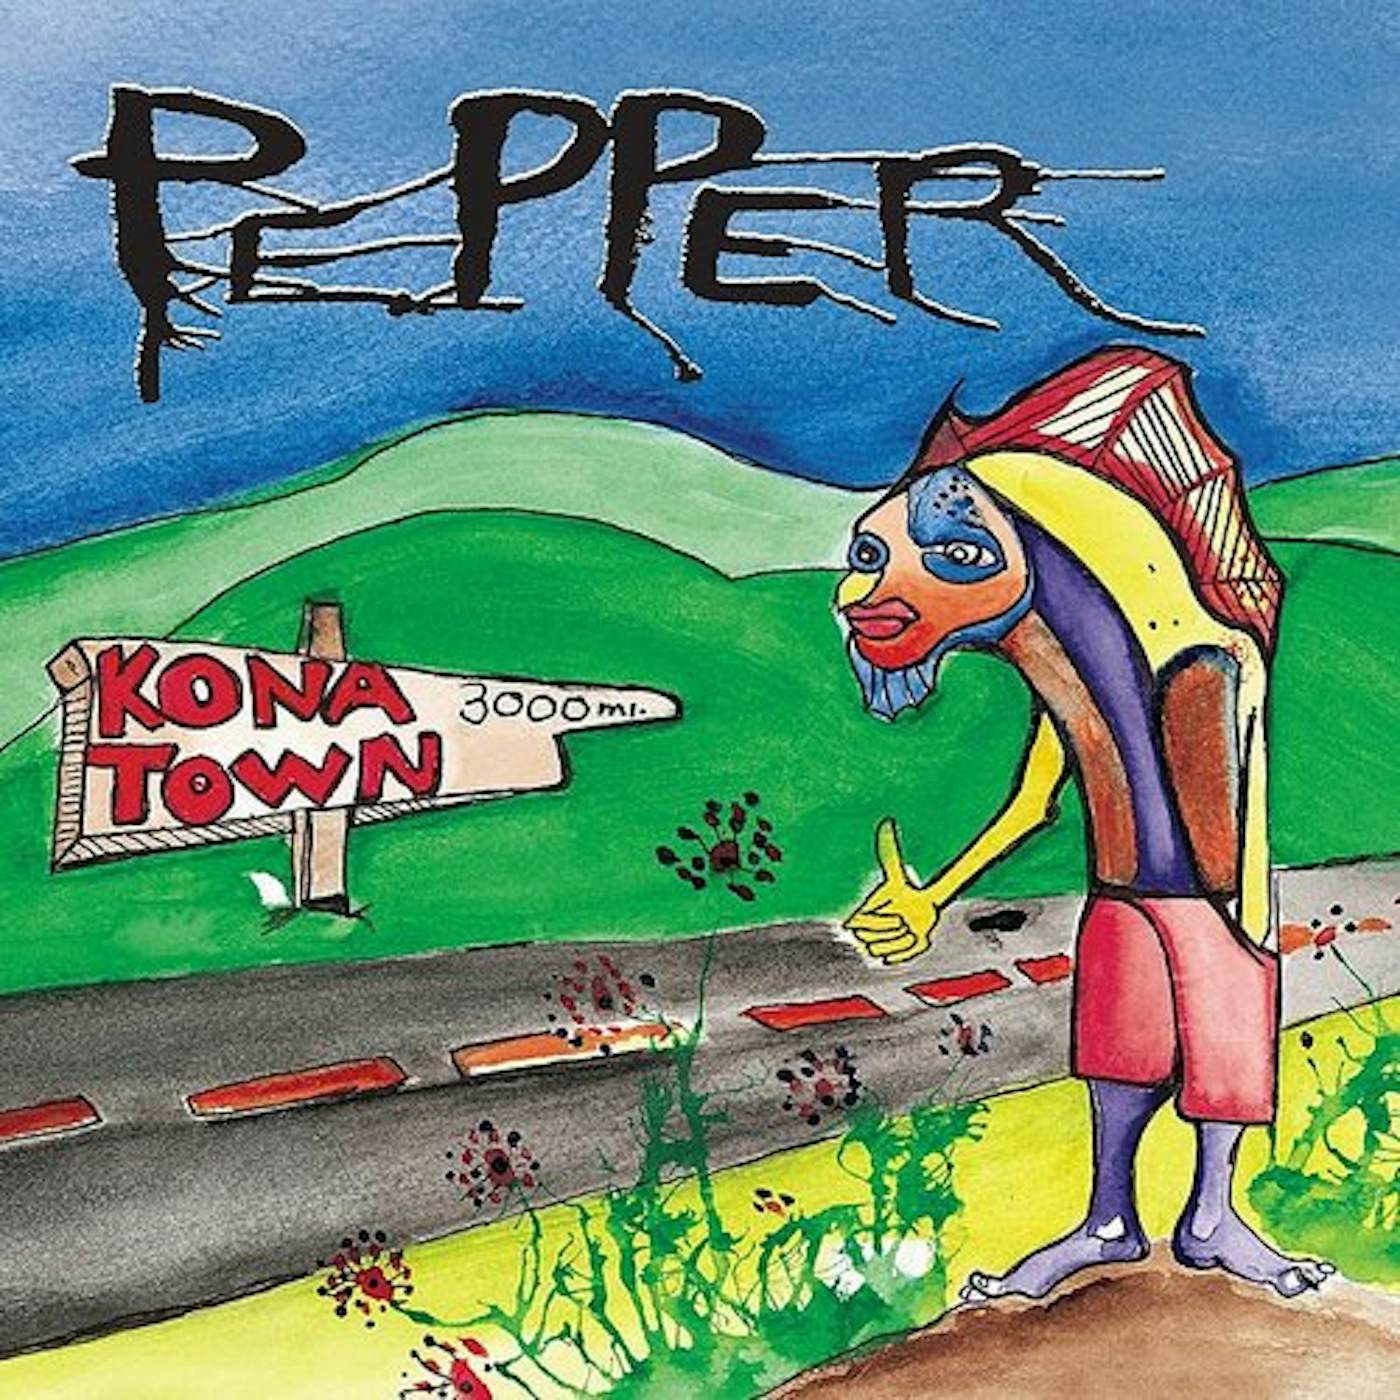 Pepper Kona Town (Red, Green, & Yellow Striped) Vinyl Record